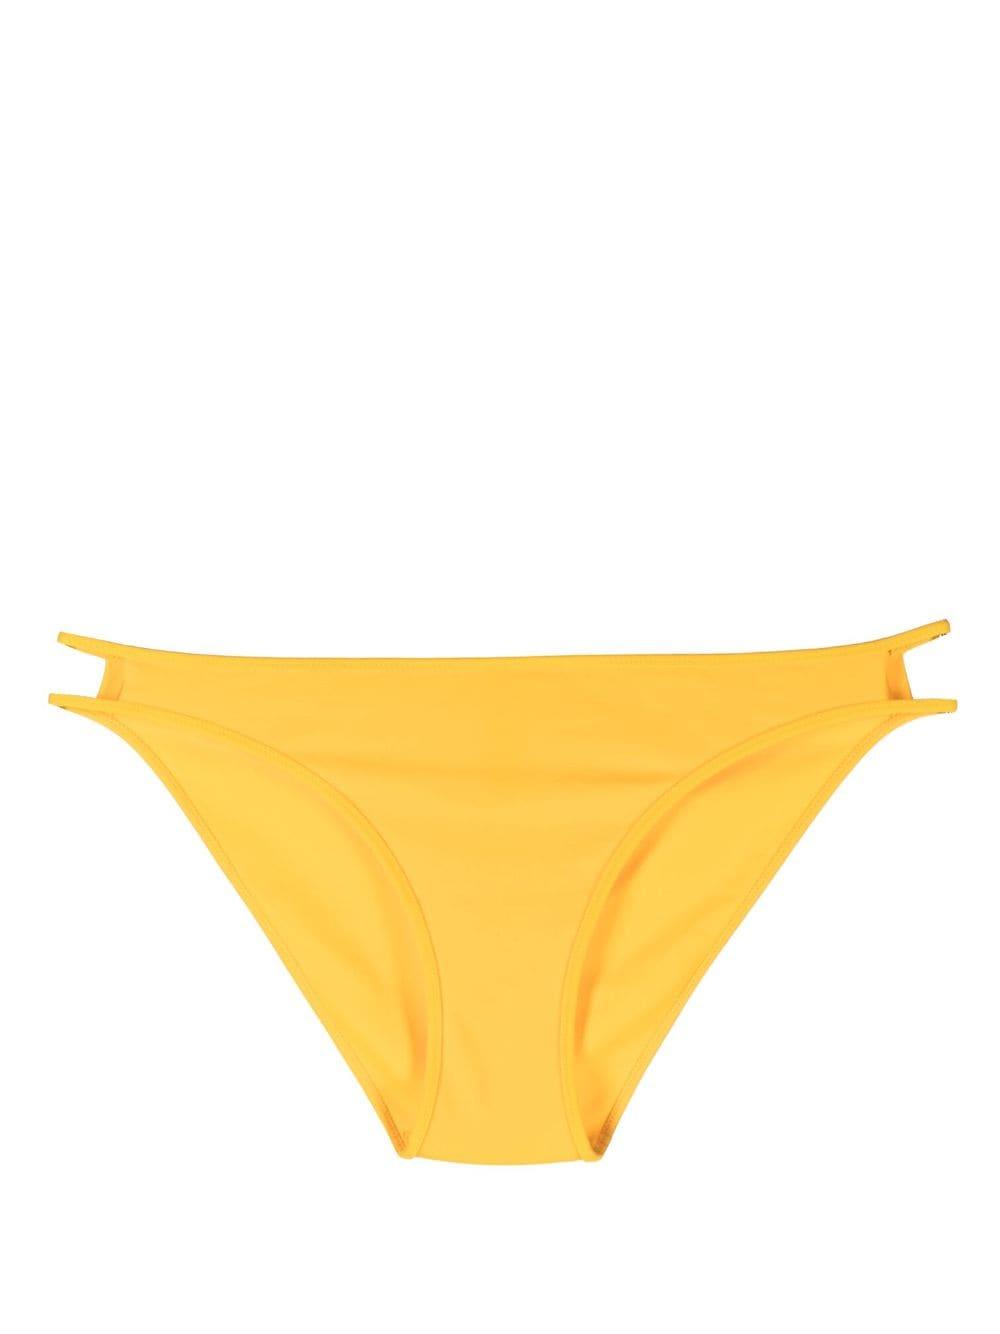 Eres Manguier Thin Bikini Bottoms in Yellow | Lyst